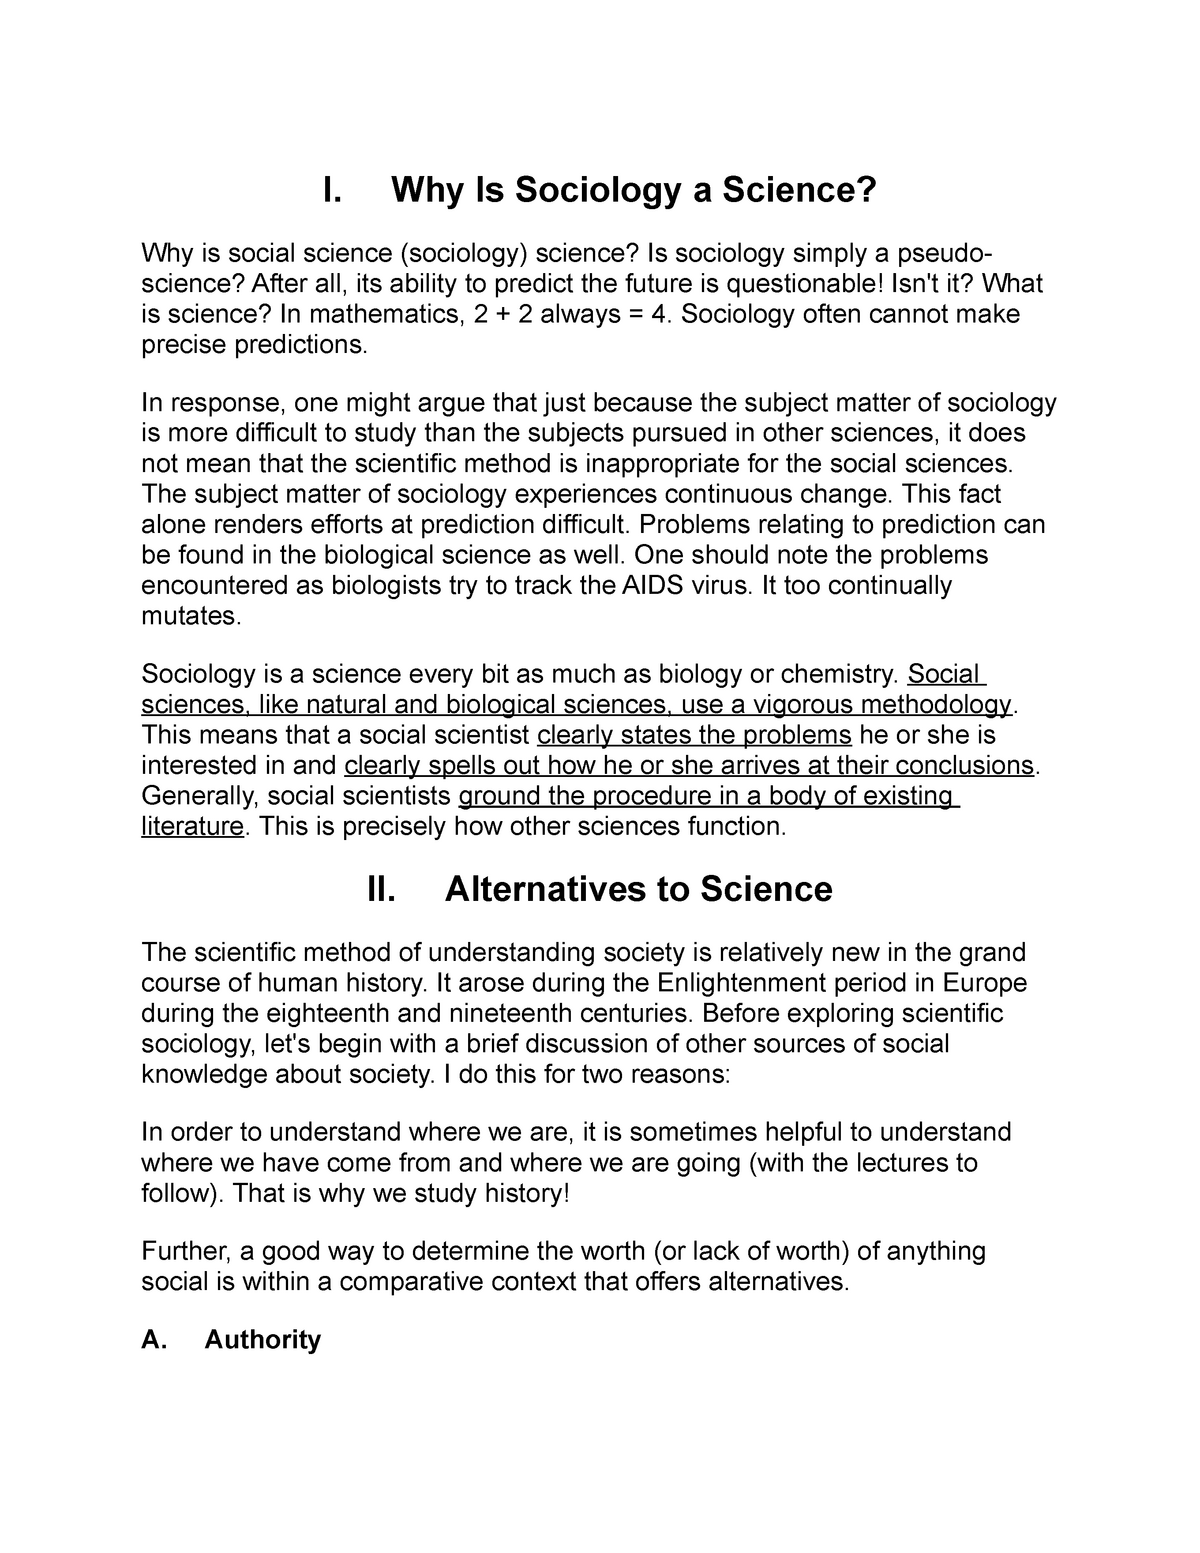 cultural studies as a science essay